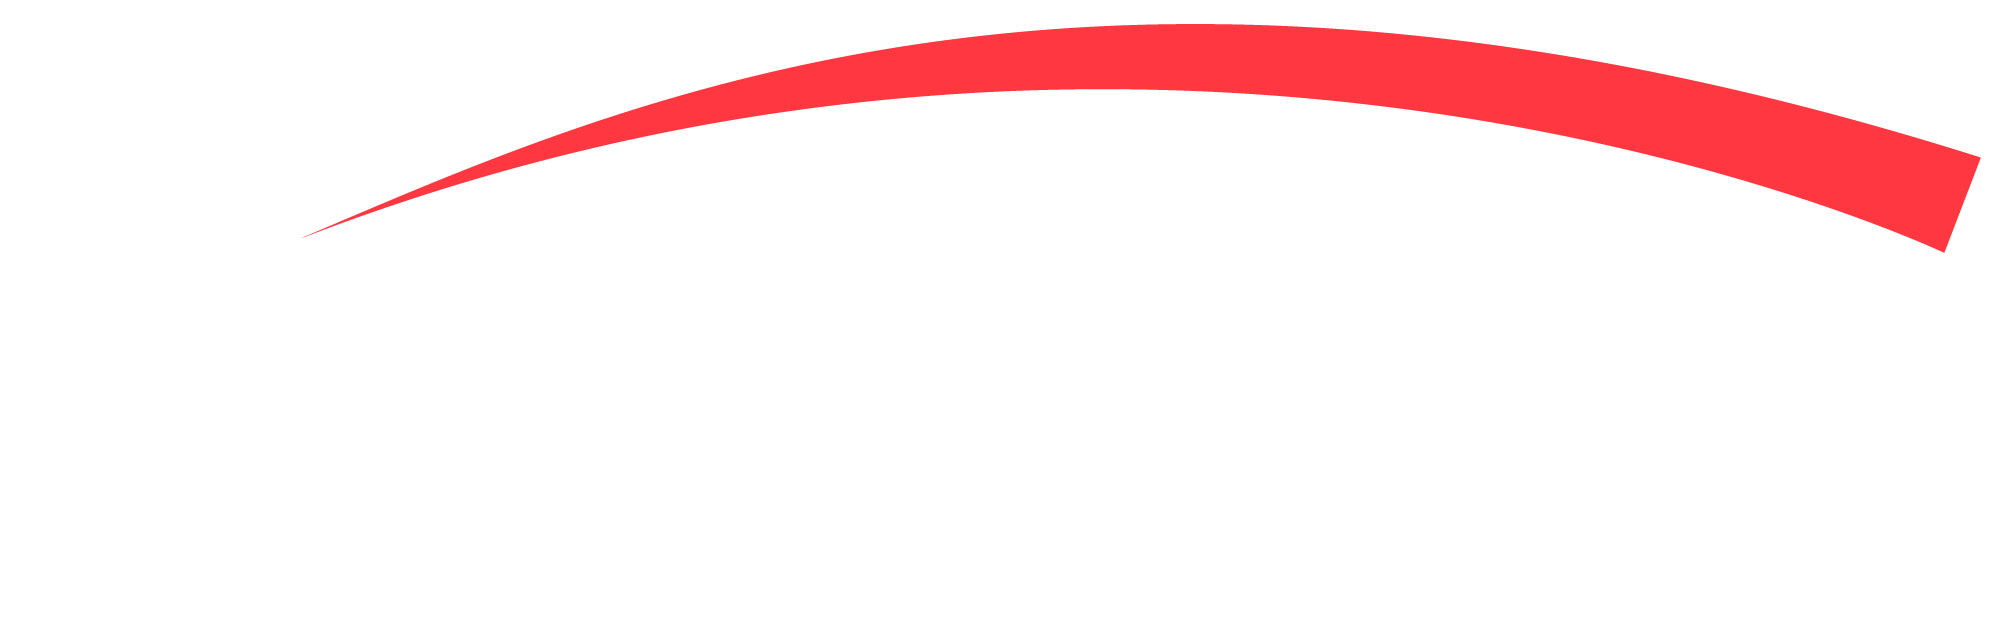 Driving Force Decks